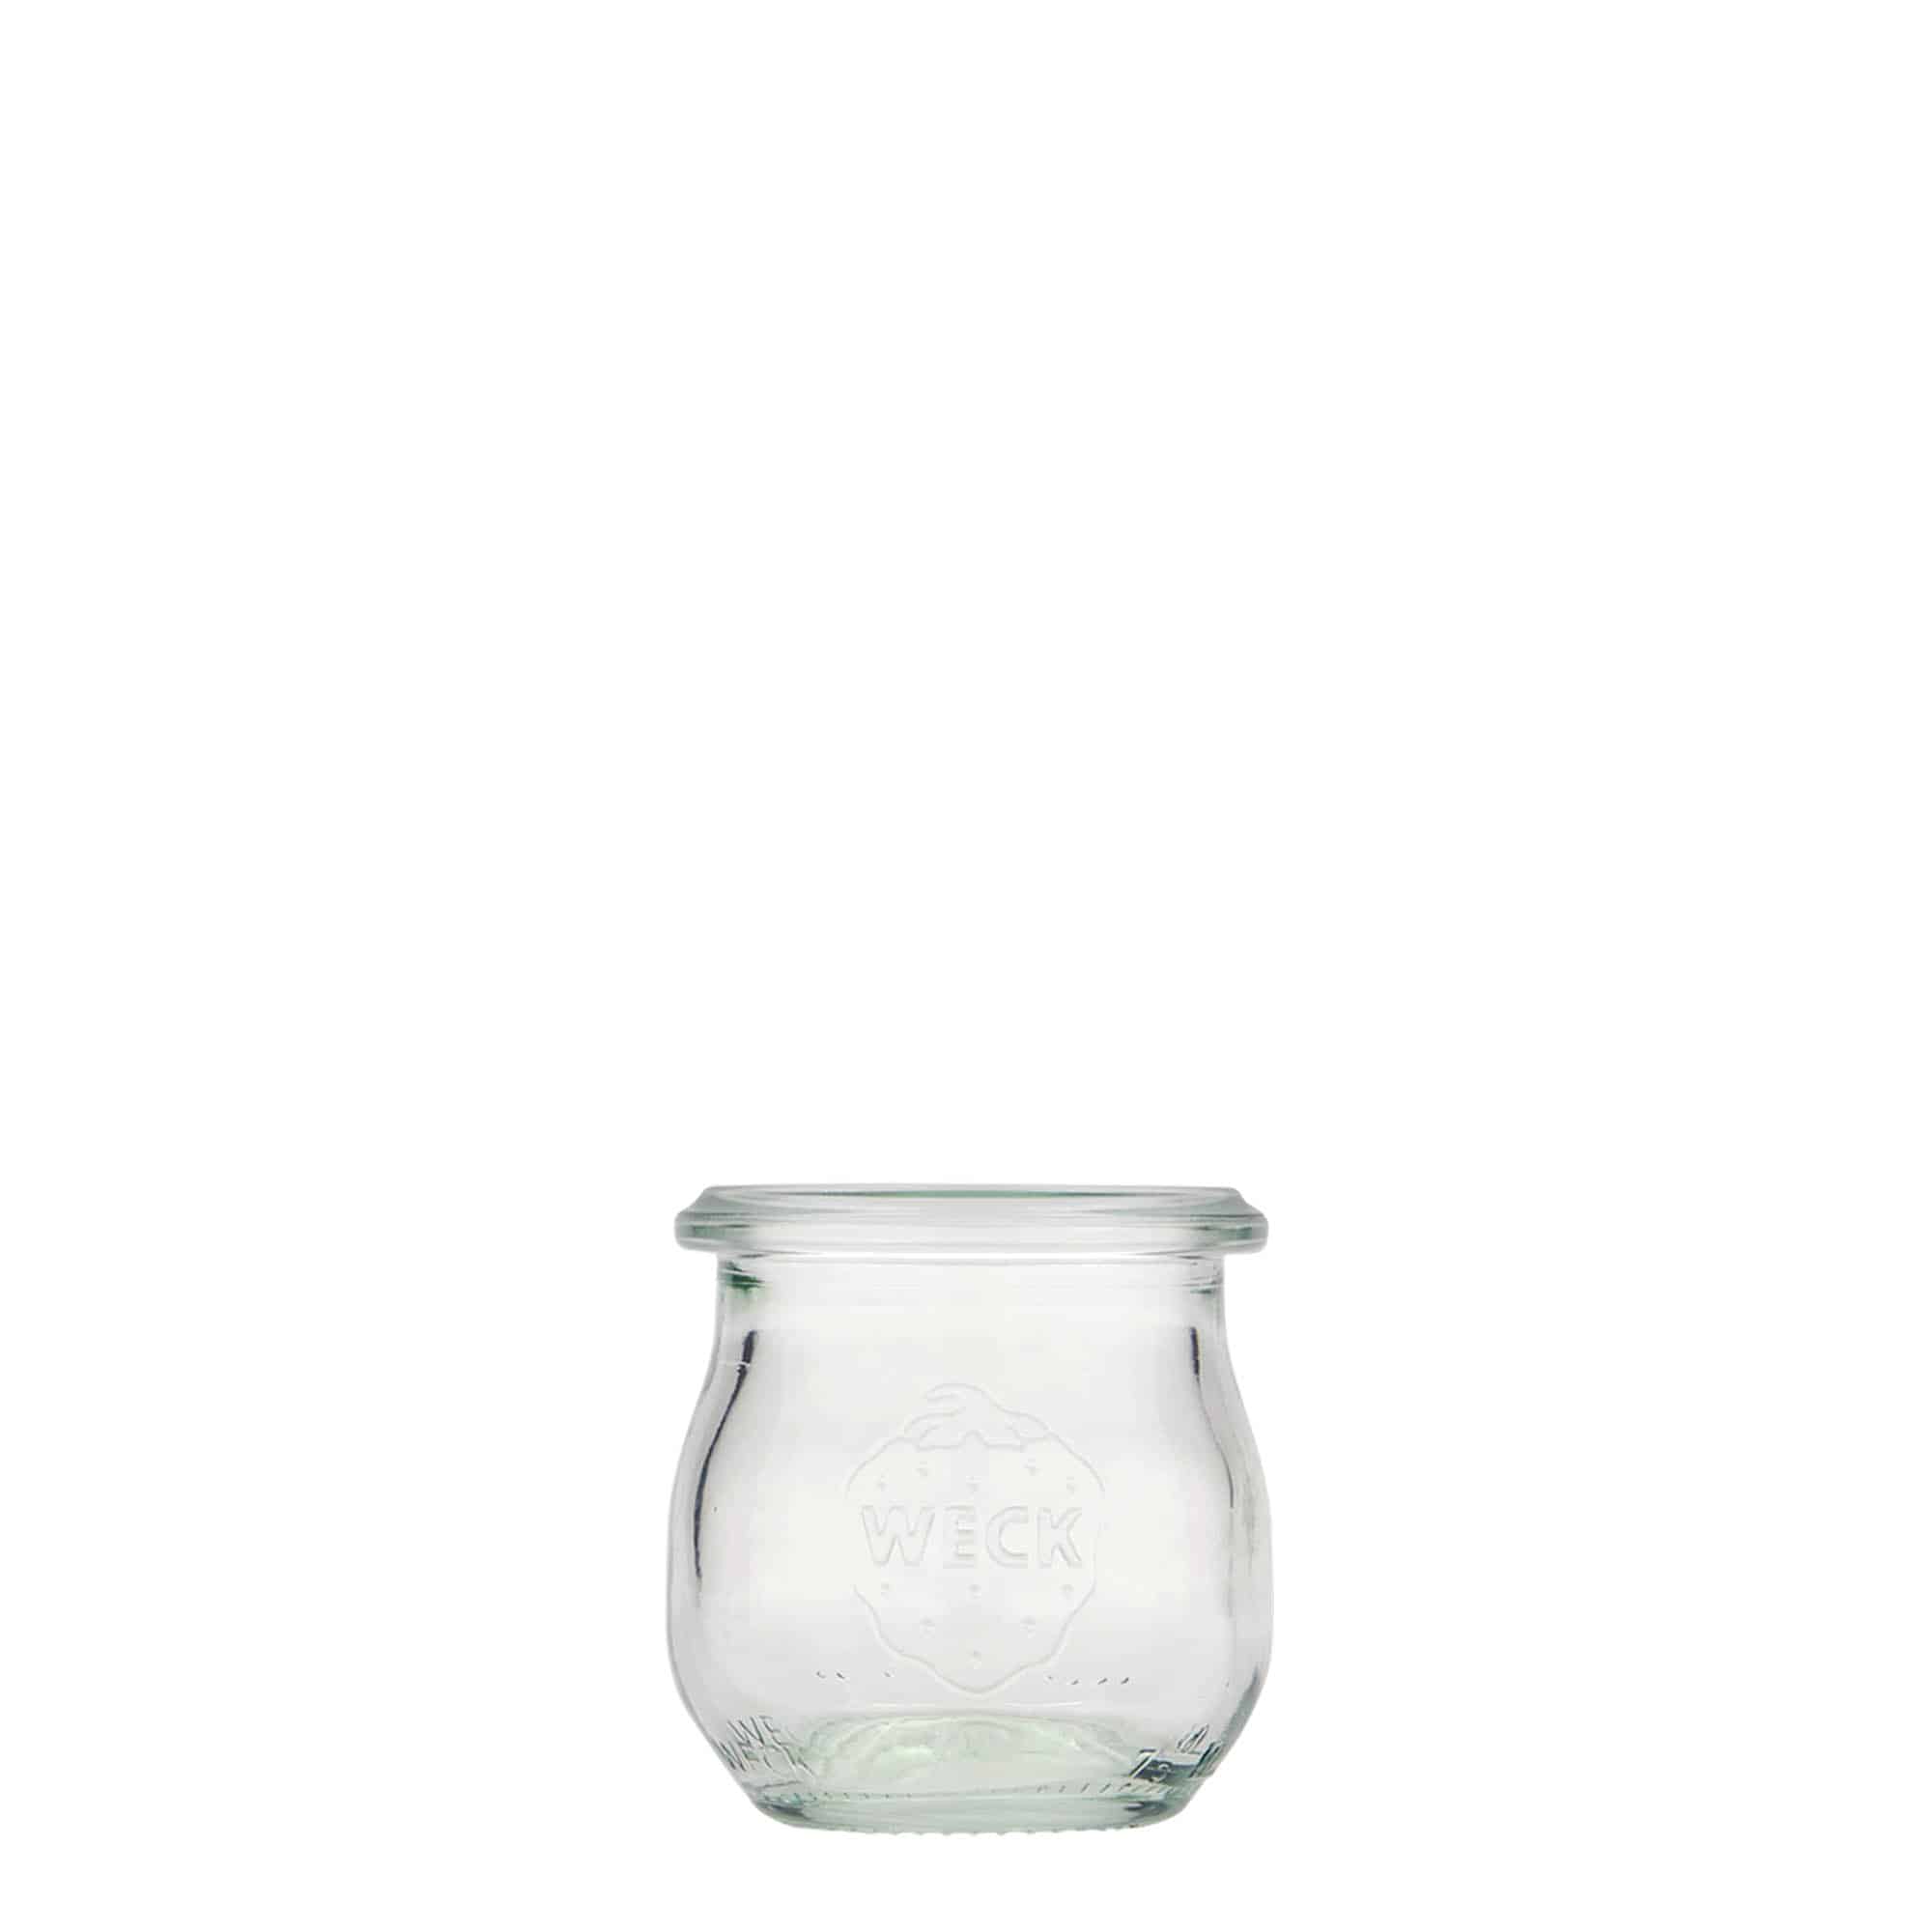 75 ml WECK tulip jar, closure: round rim